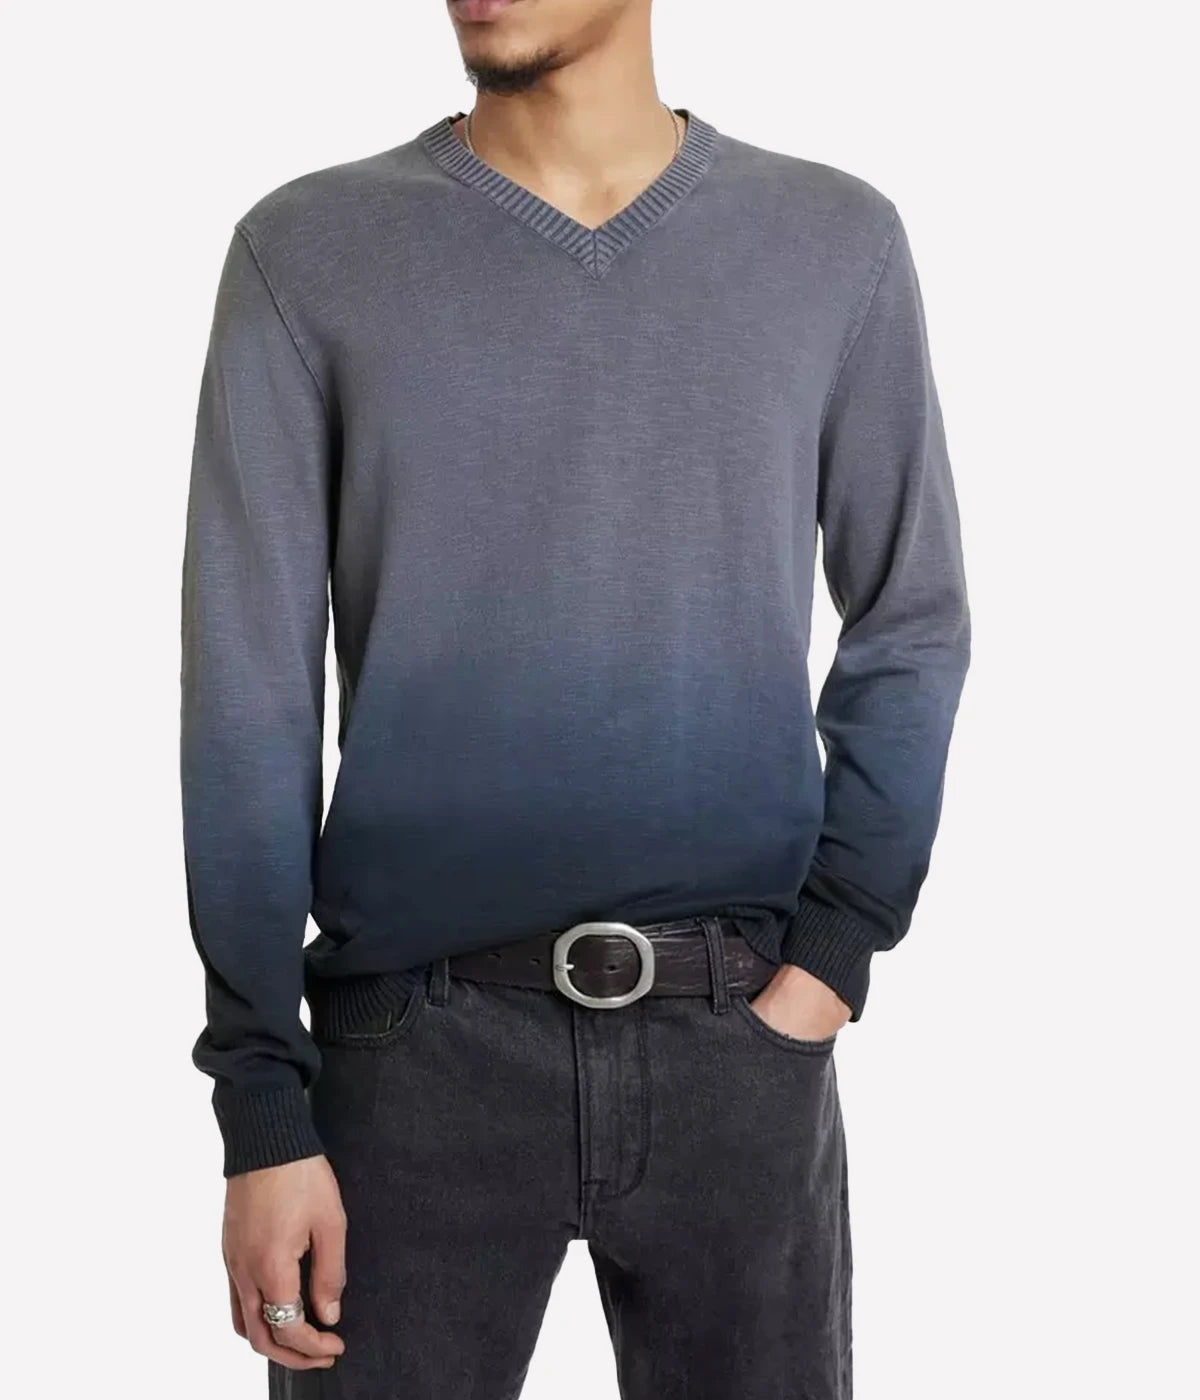 Kane Long Sleeve Slub Cotton V Neck Sweater in Purple Haze